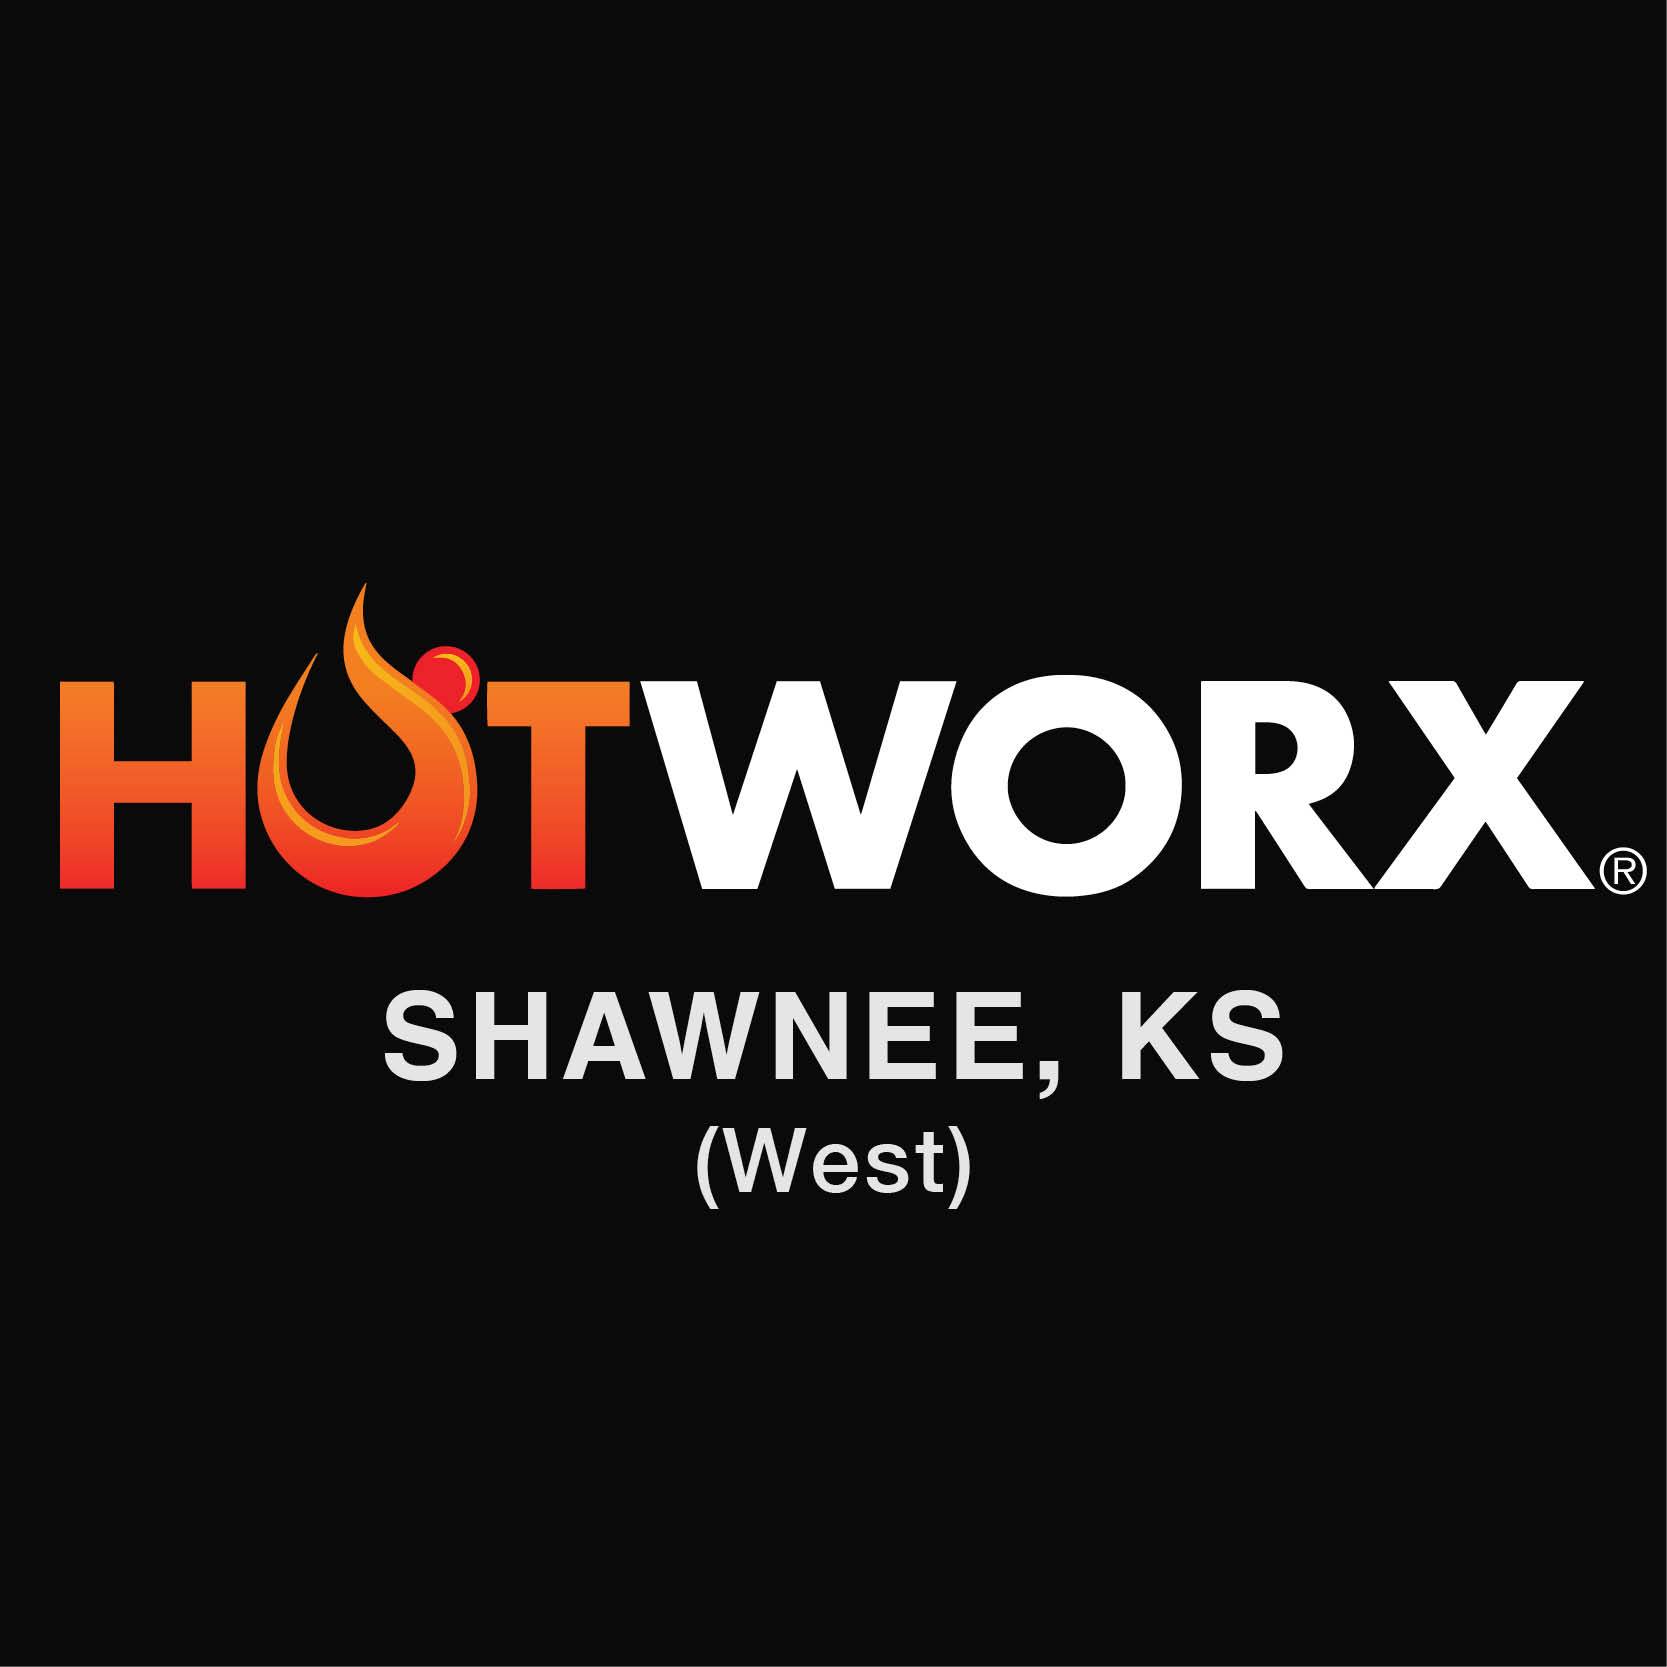 HOTWORX - Shawnee, KS (West)'s Logo